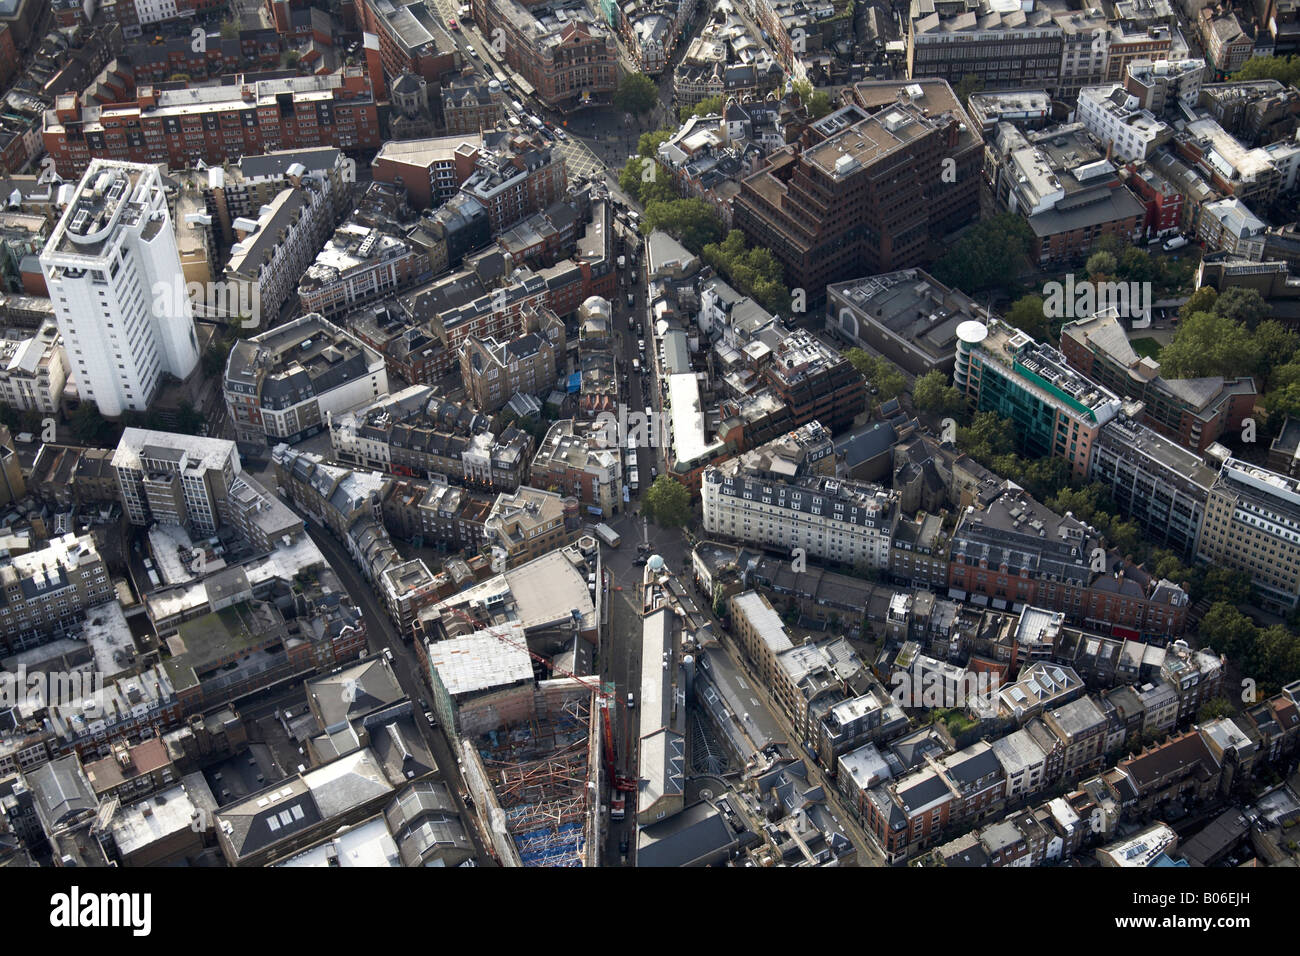 Vista aérea del sur al oeste de Seven Dials Earlham St Shaftesbury Ave Charing Cross Rd Cambridge Circus Covent Garden, London WC2 UK Foto de stock